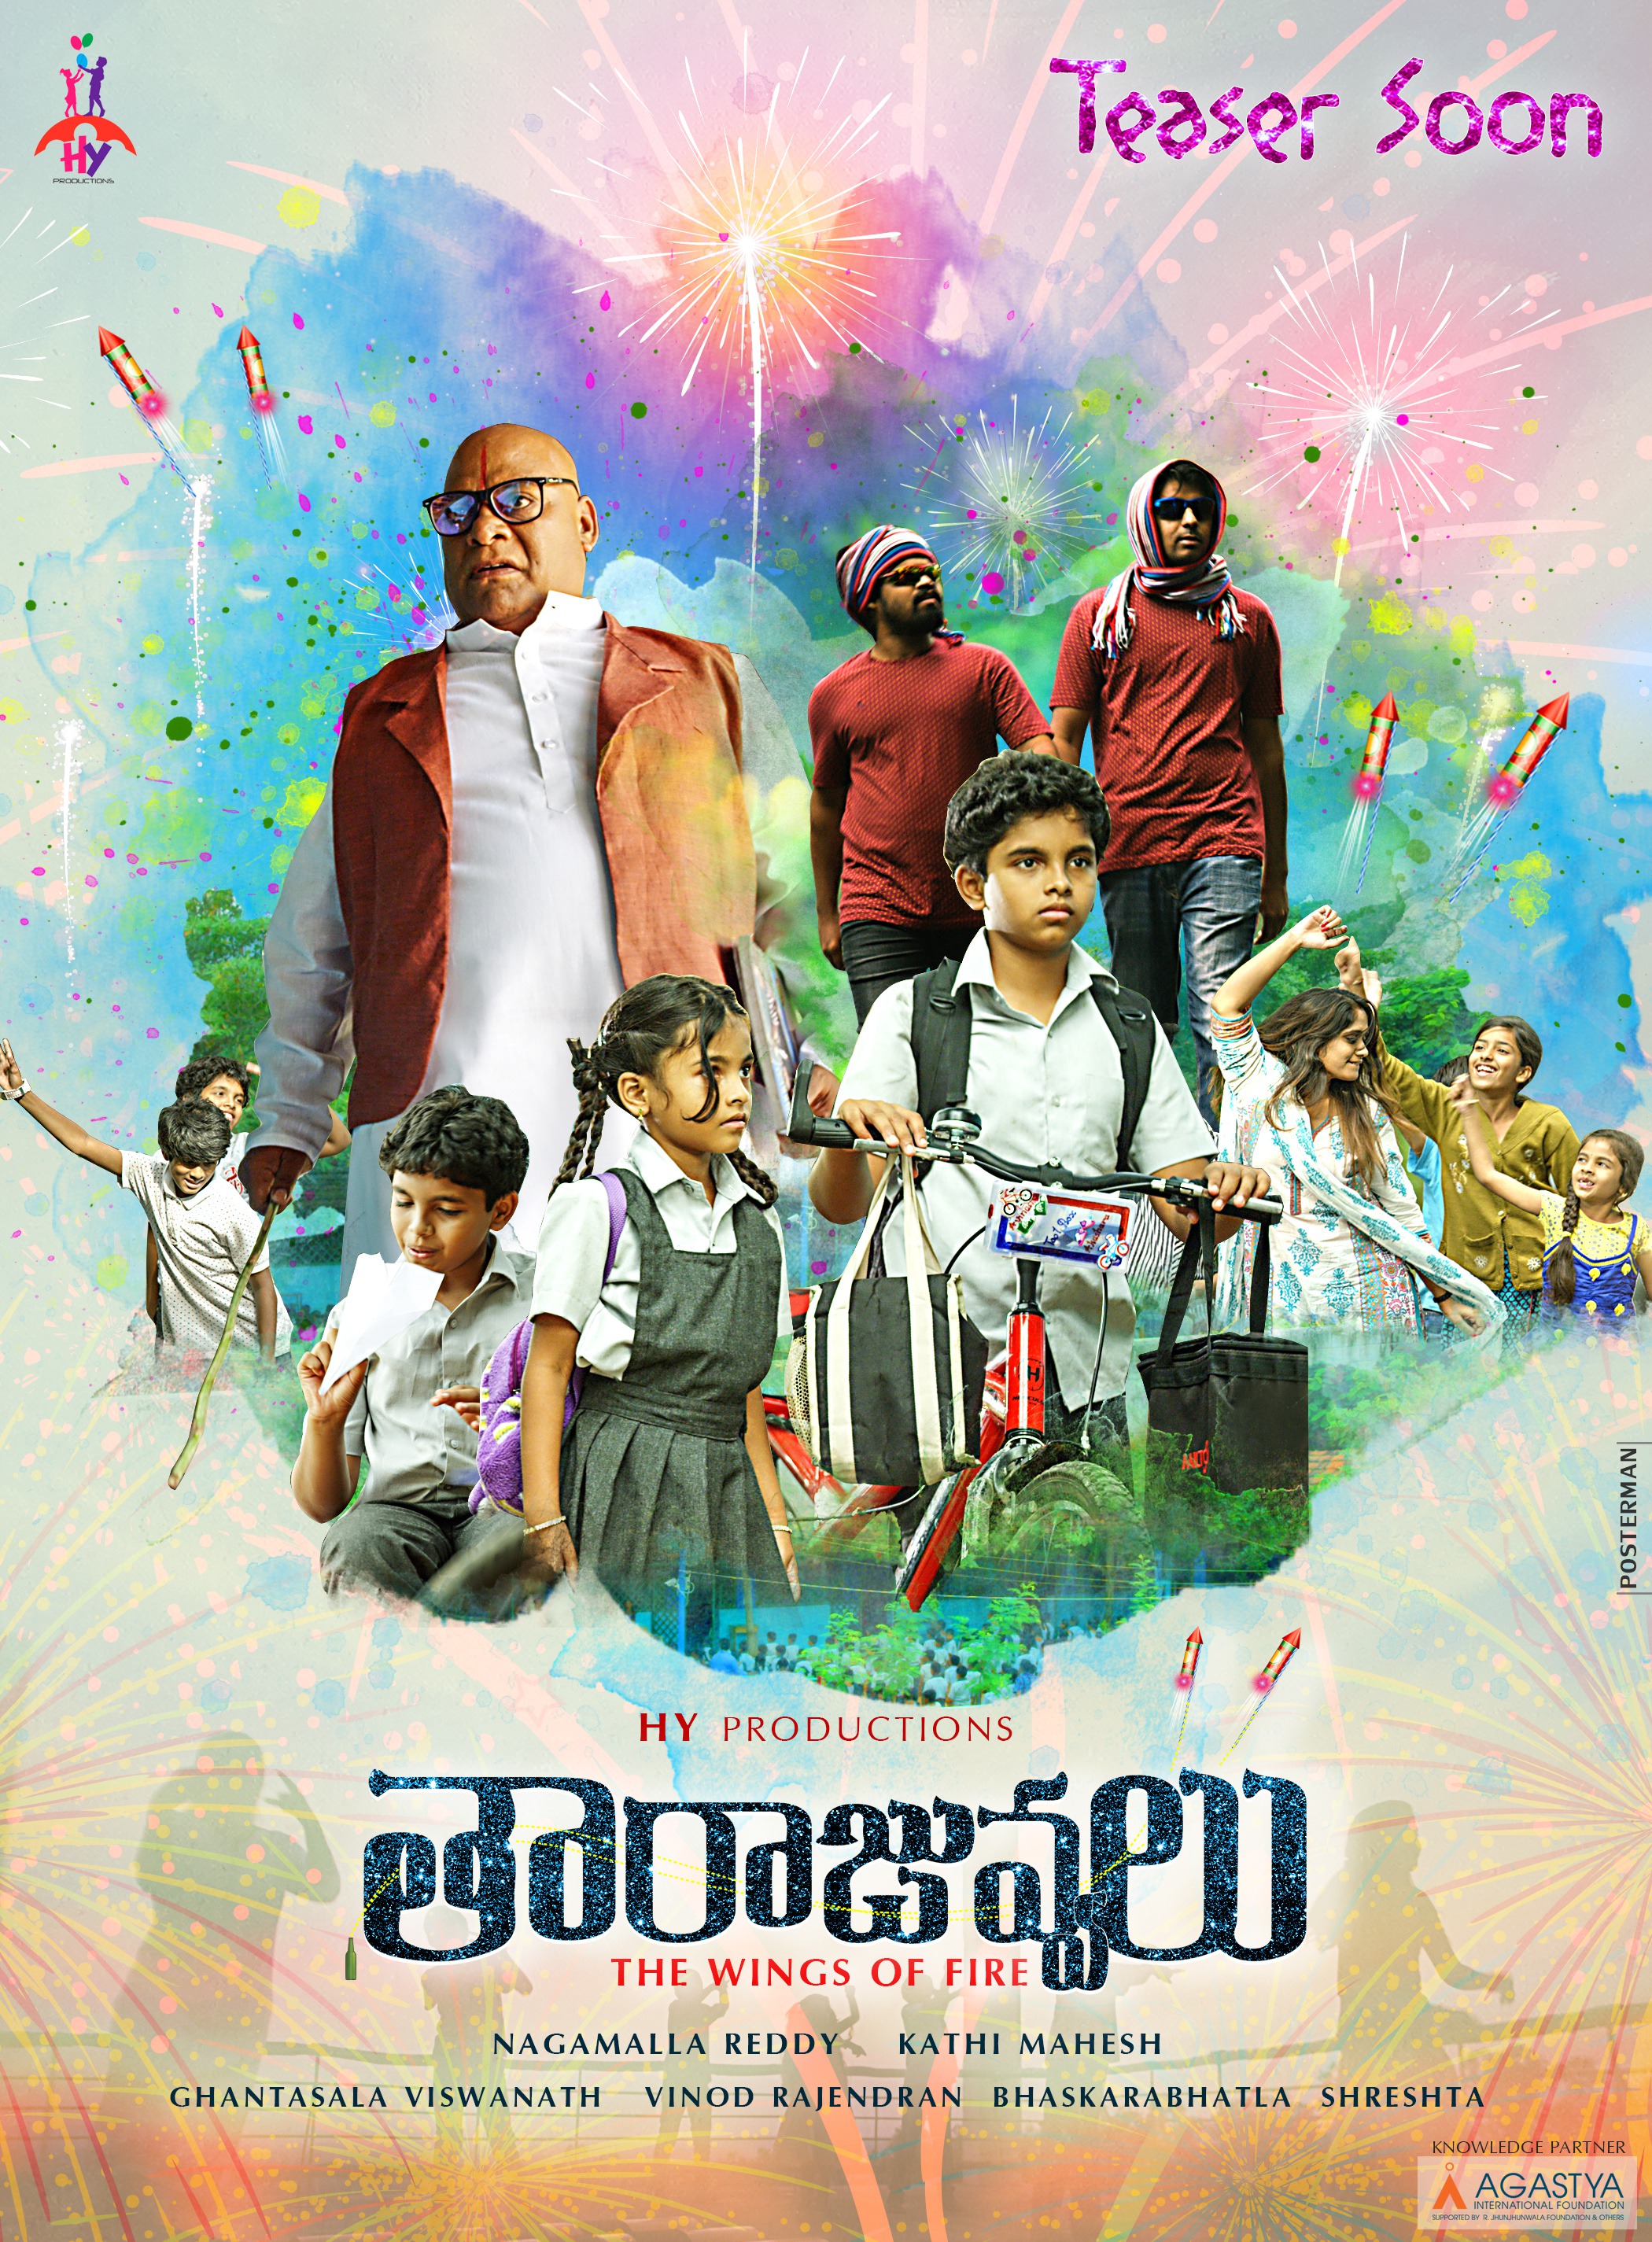 Mega Sized Movie Poster Image for Taarajuvvalu 